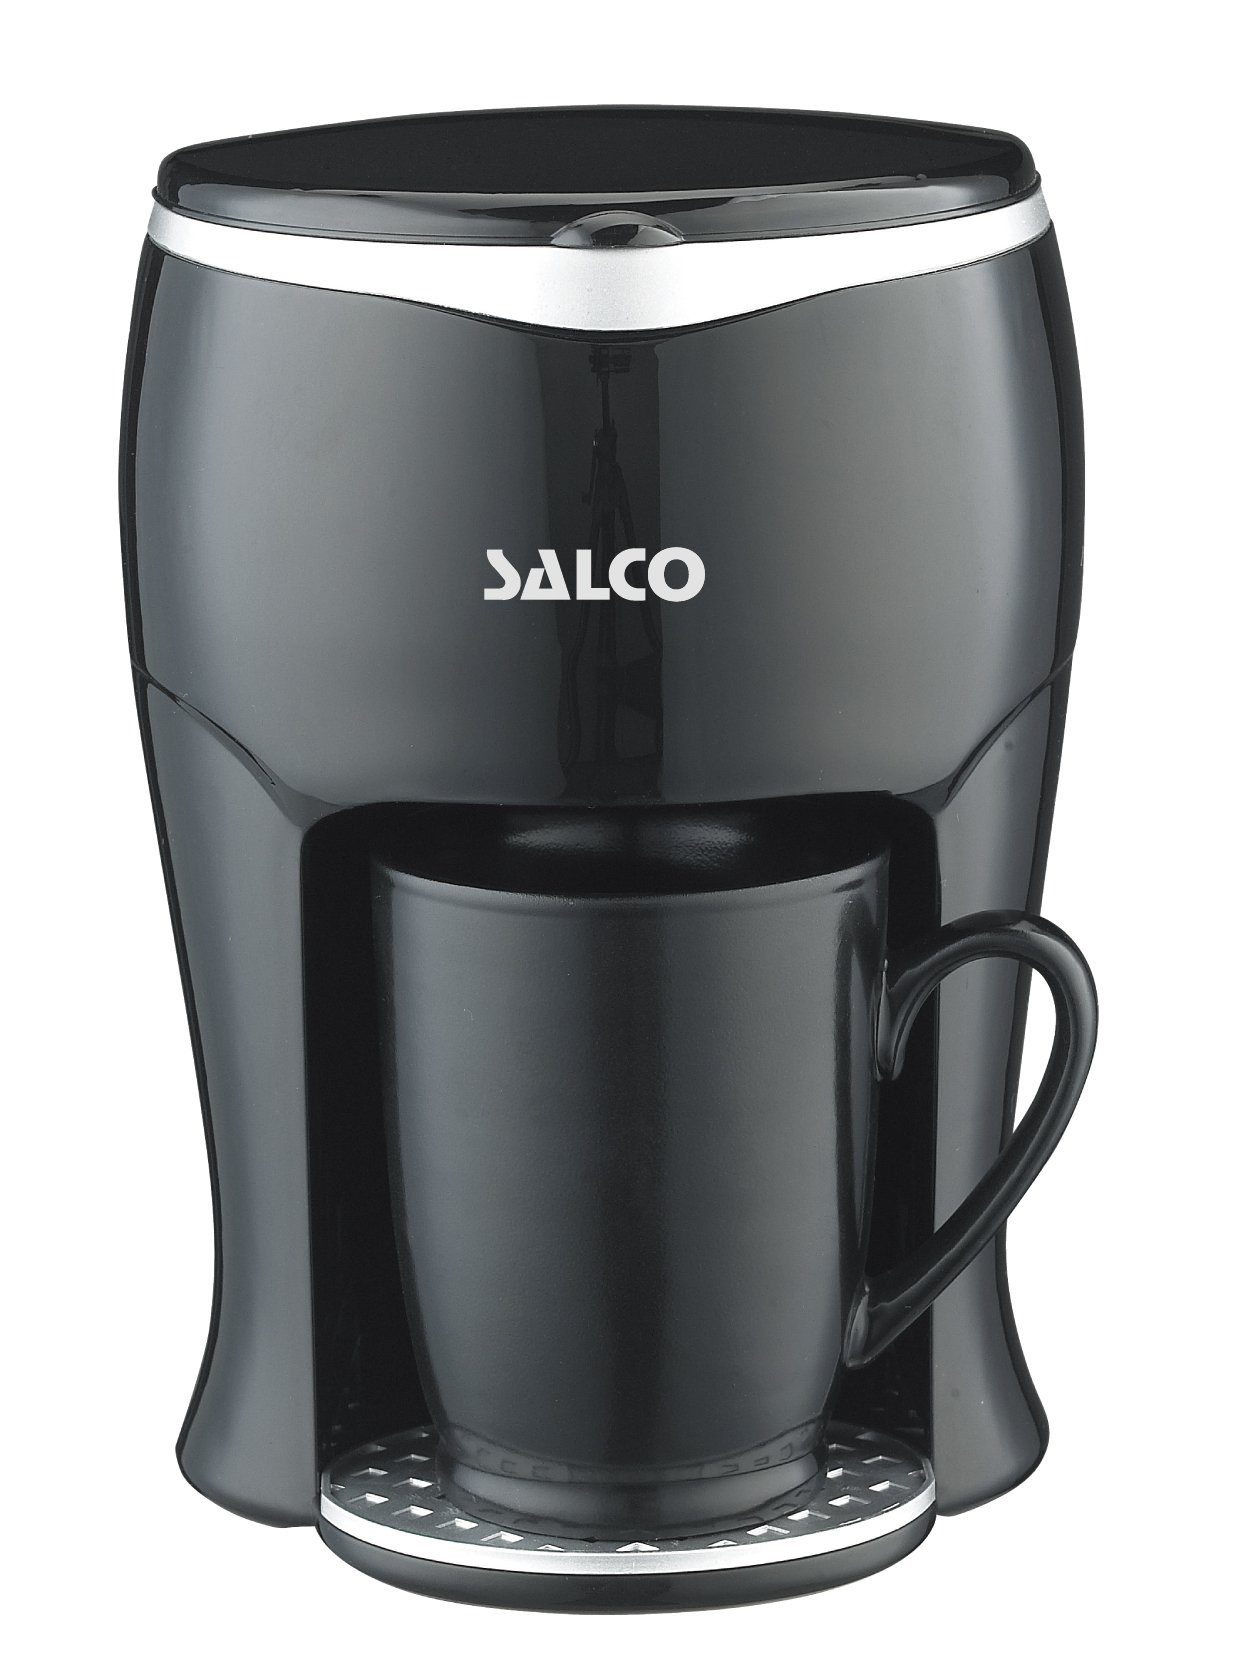 SALCO Filterkaffeemaschine KFC-12, Für Kaffee oder Tee, inkl. Keramiktasse 150ml, mit Permanentfilter